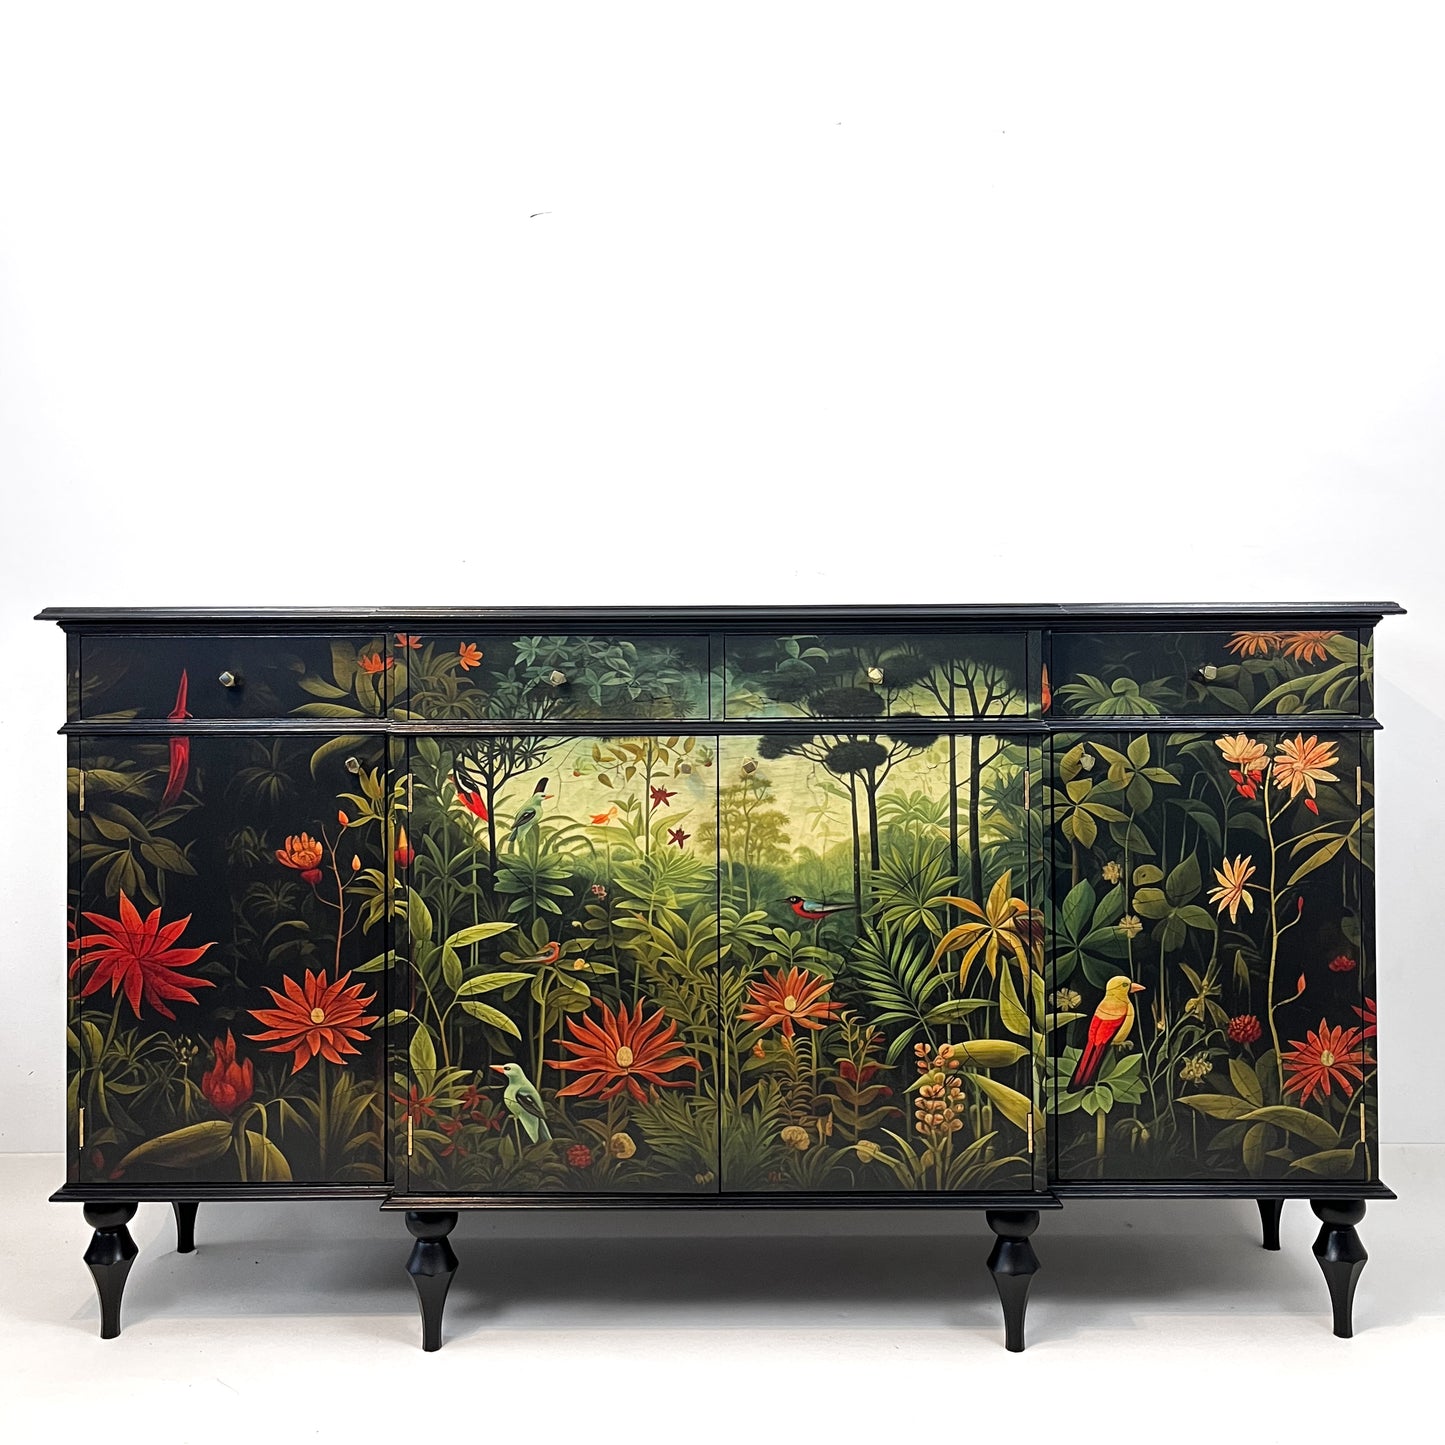 Large vintage sideboard with tropical forest design